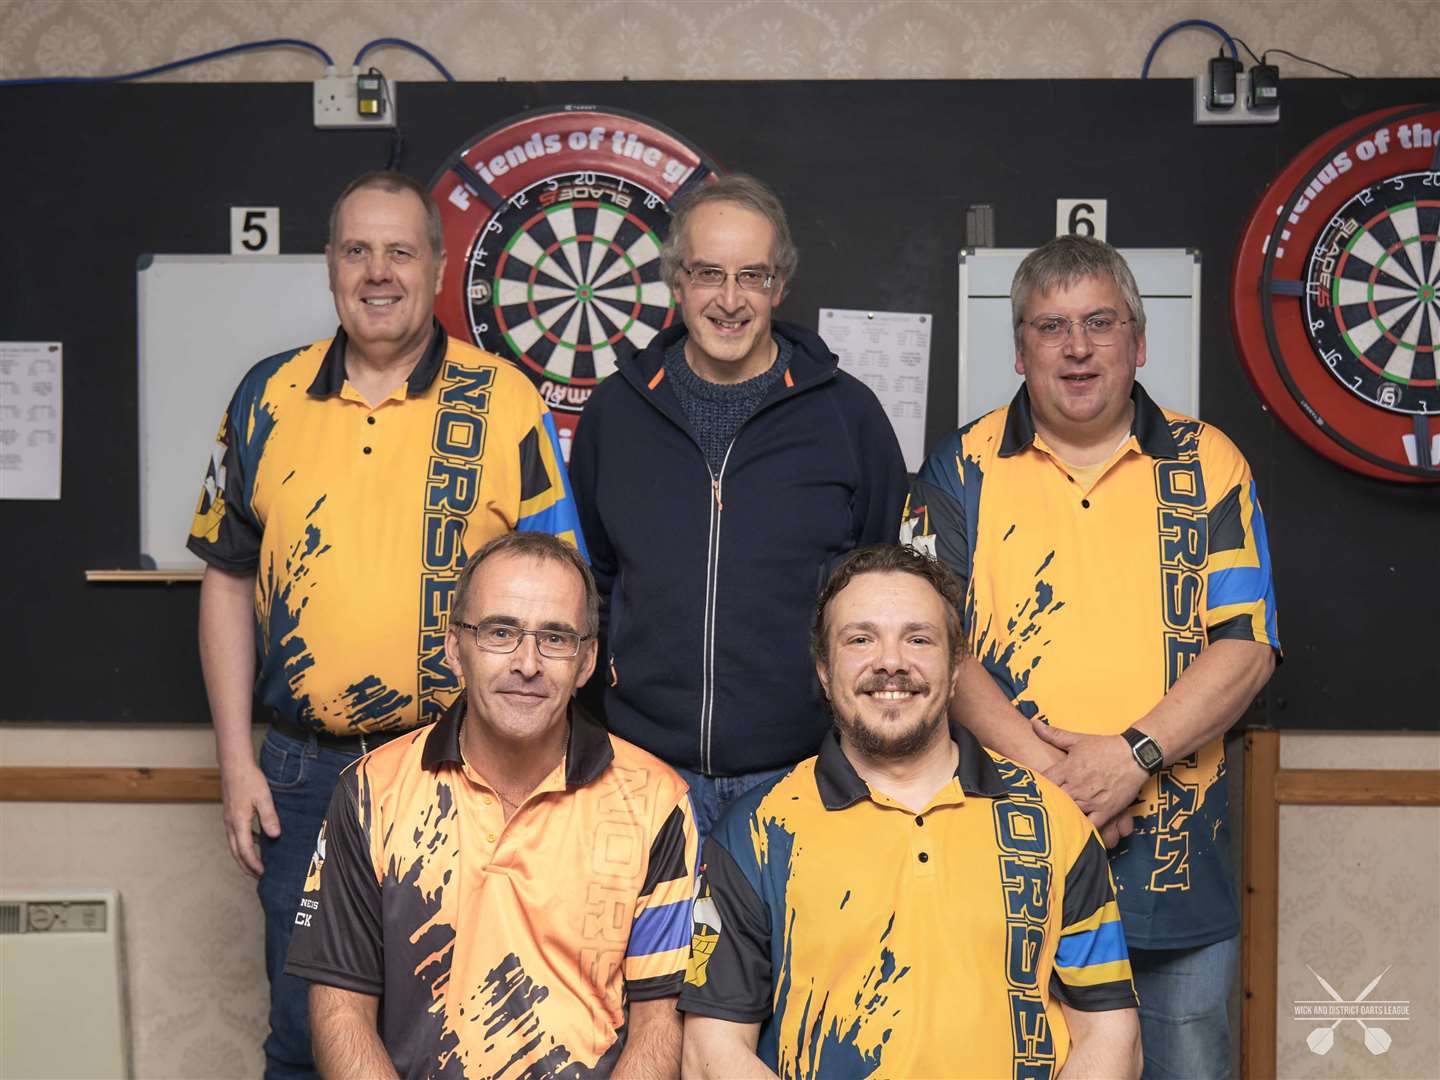 The Norseman team in Wick and District Darts League. Picture: Saulius Kazakauskas